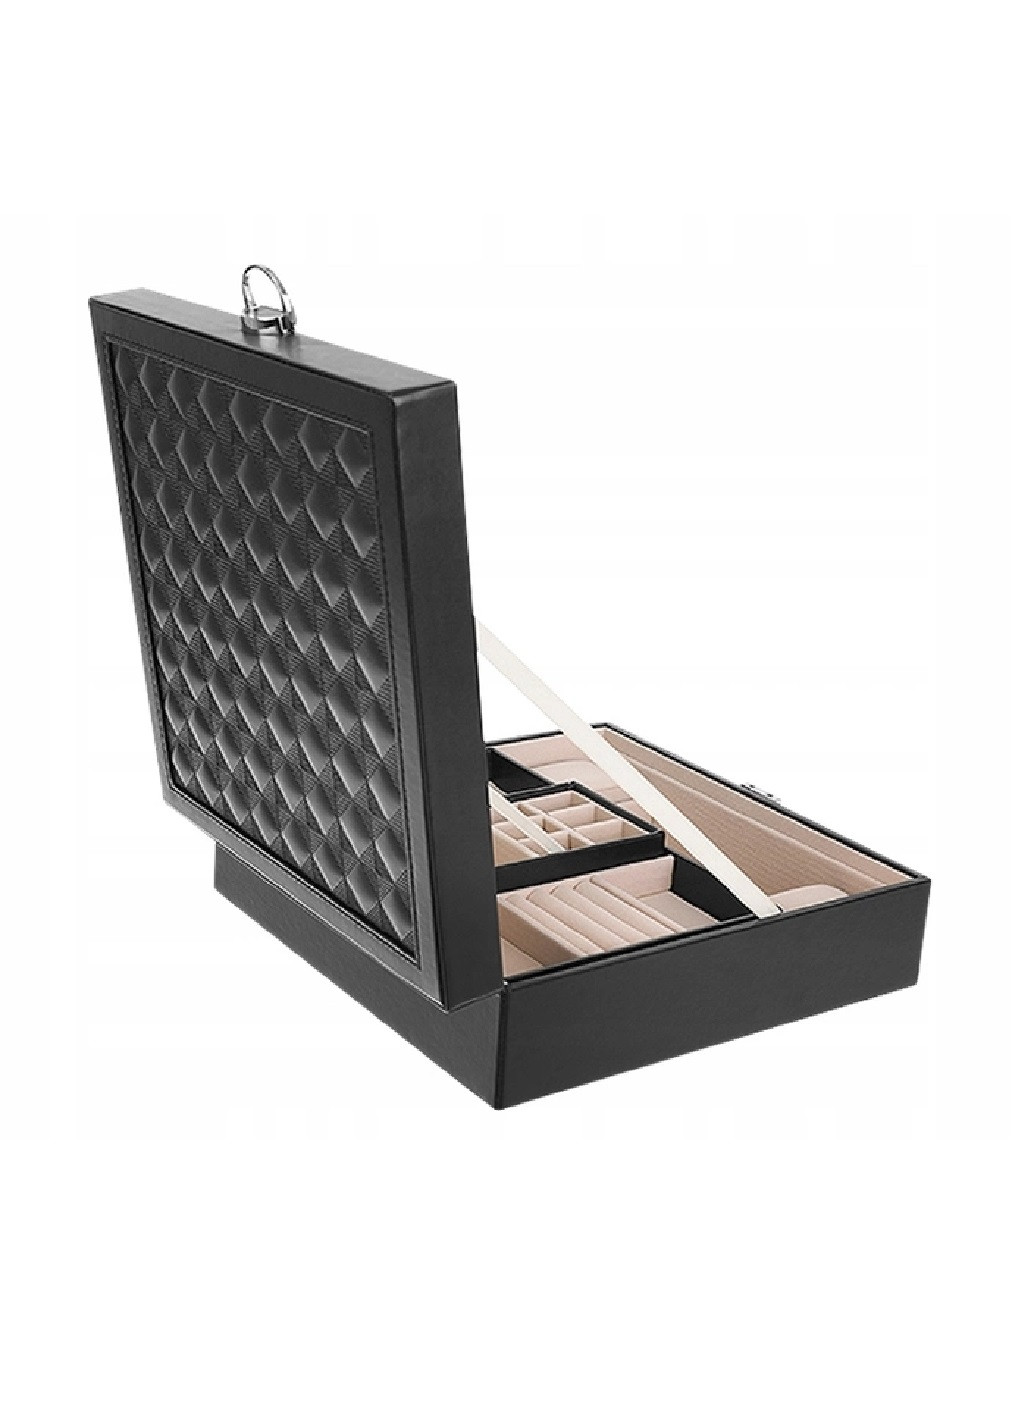 Шкатулка сундук органайзер коробка футляр для хранения украшений бижутерии 25.5х25.5х9 см (474654-Prob) Черная Unbranded (259207755)